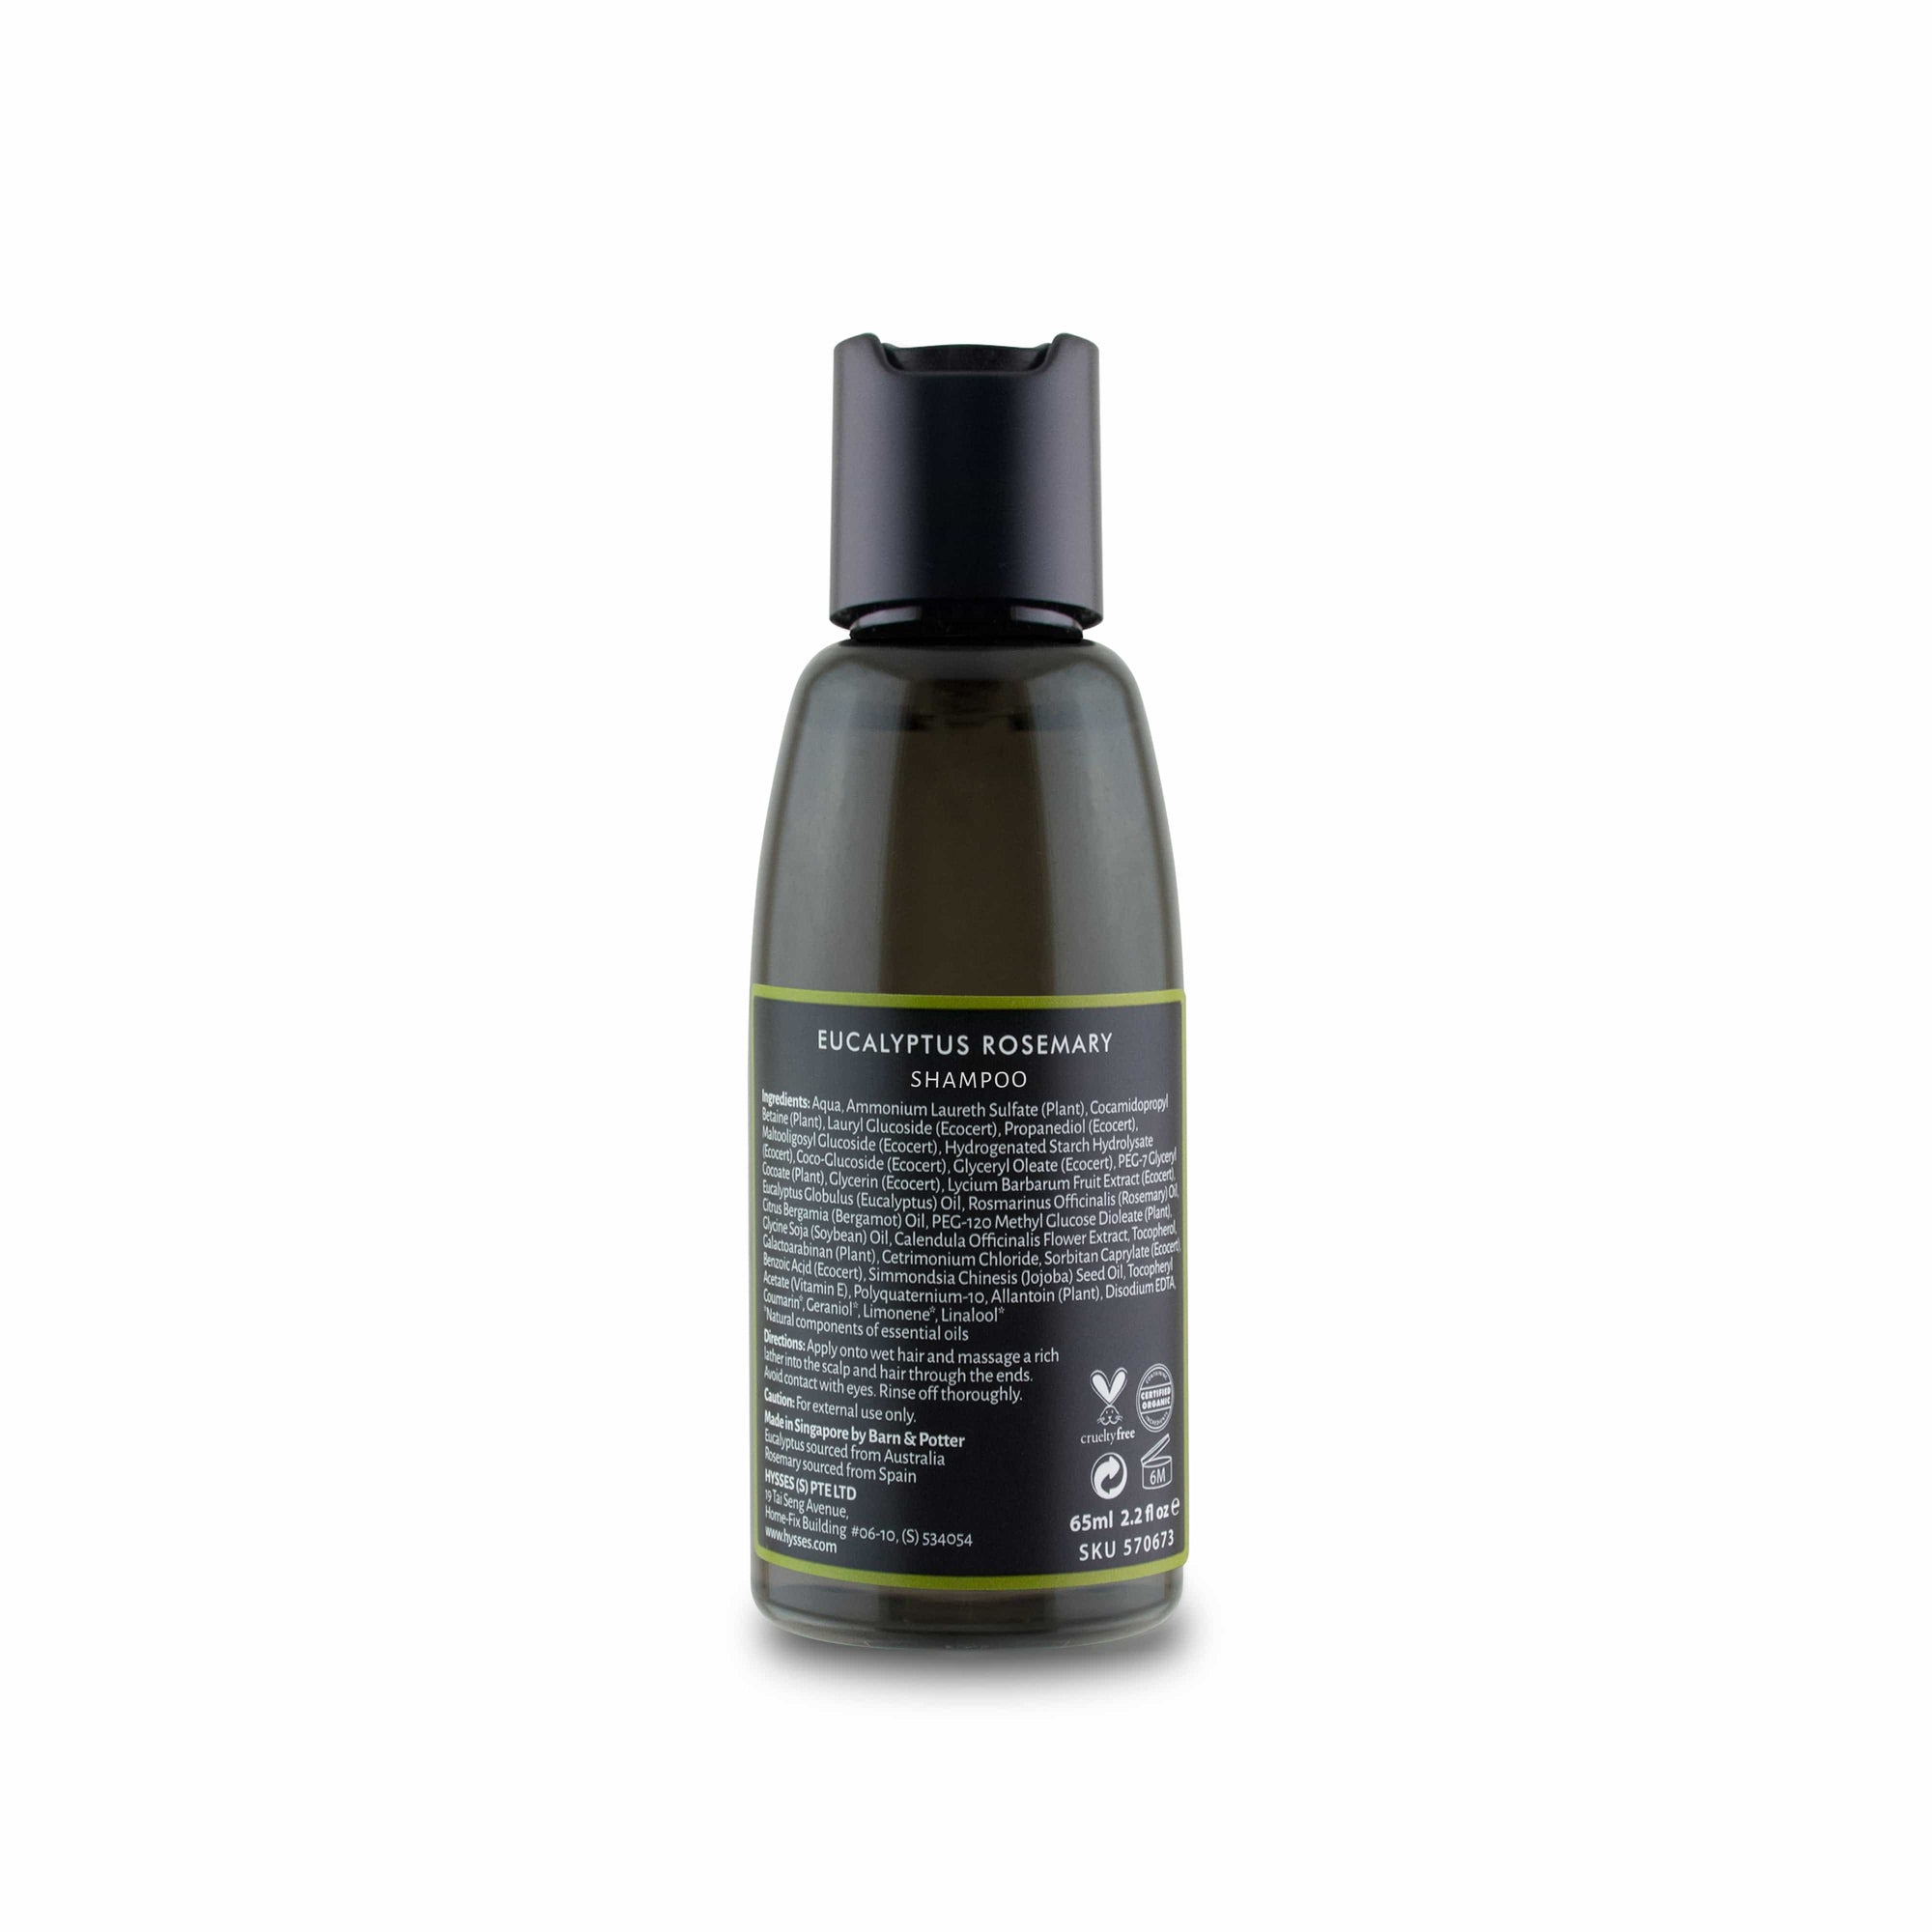 Hysses Hair Care Shampoo, Eucalyptus Rosemary, 65ml